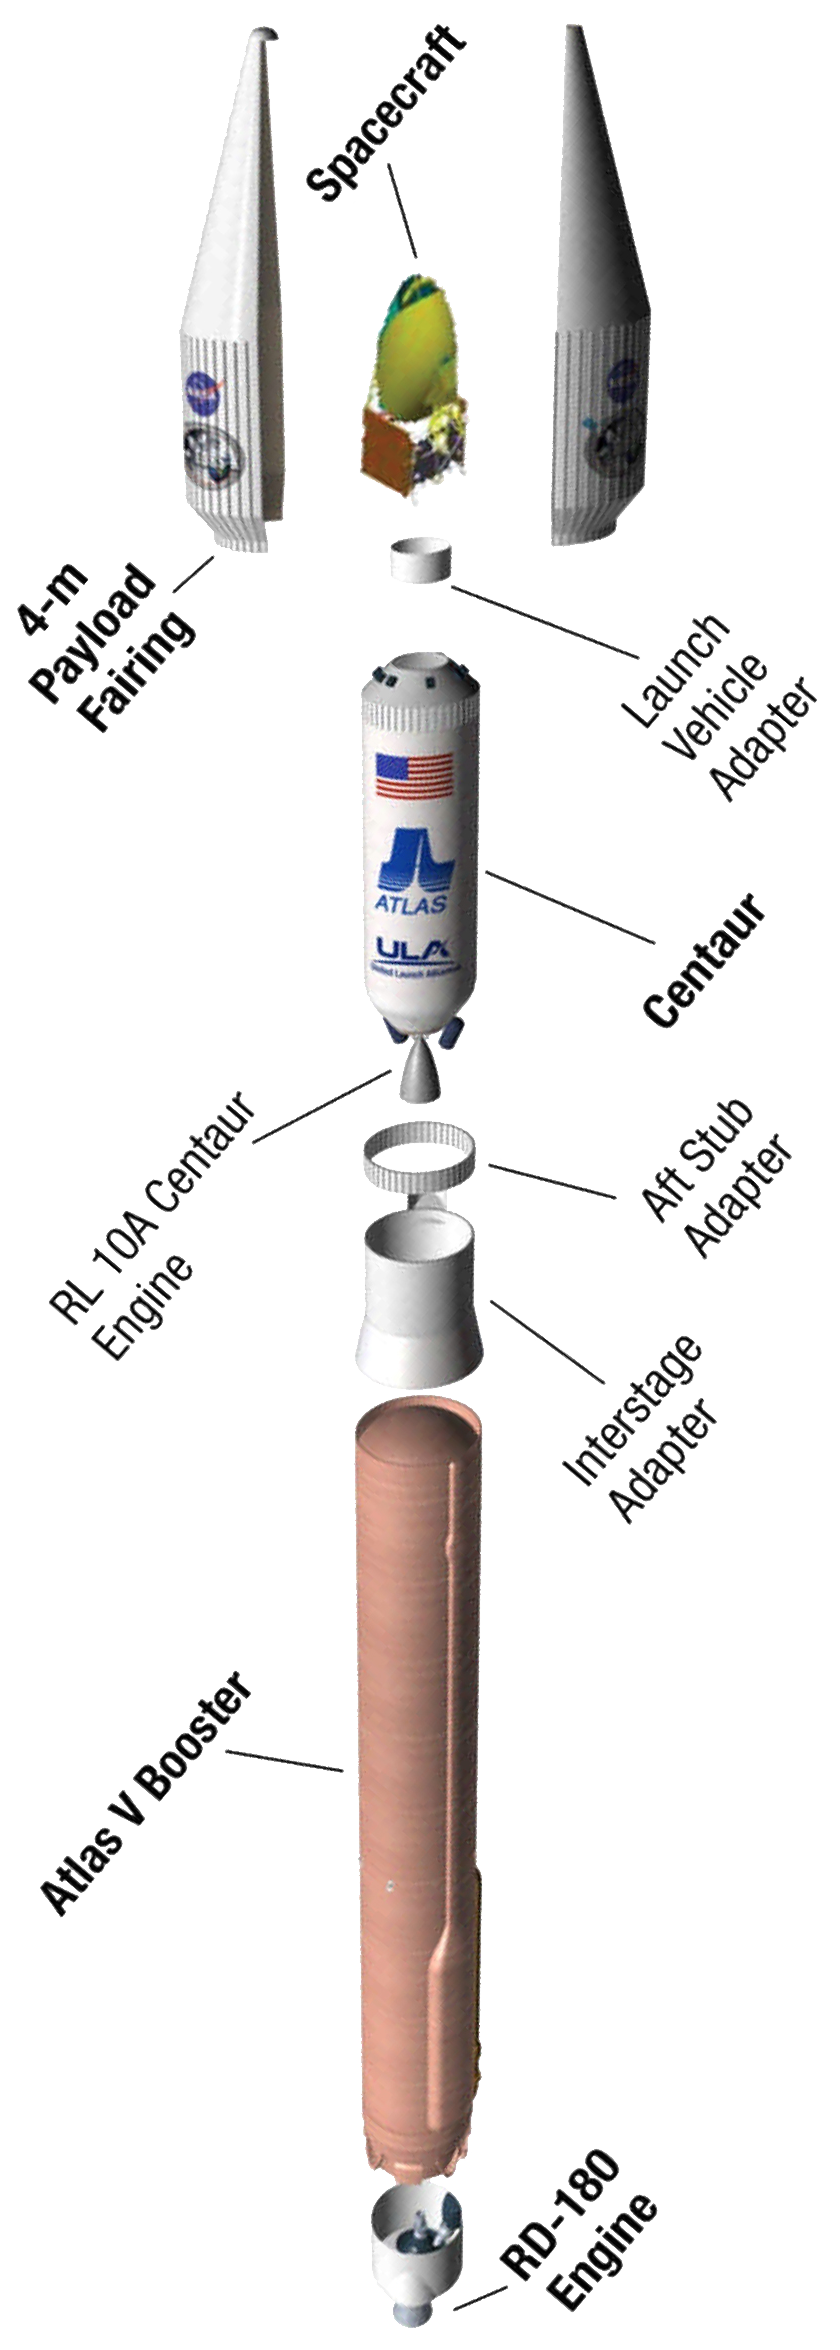 Atlas_V_Launch_Vehicle_Diagram.png